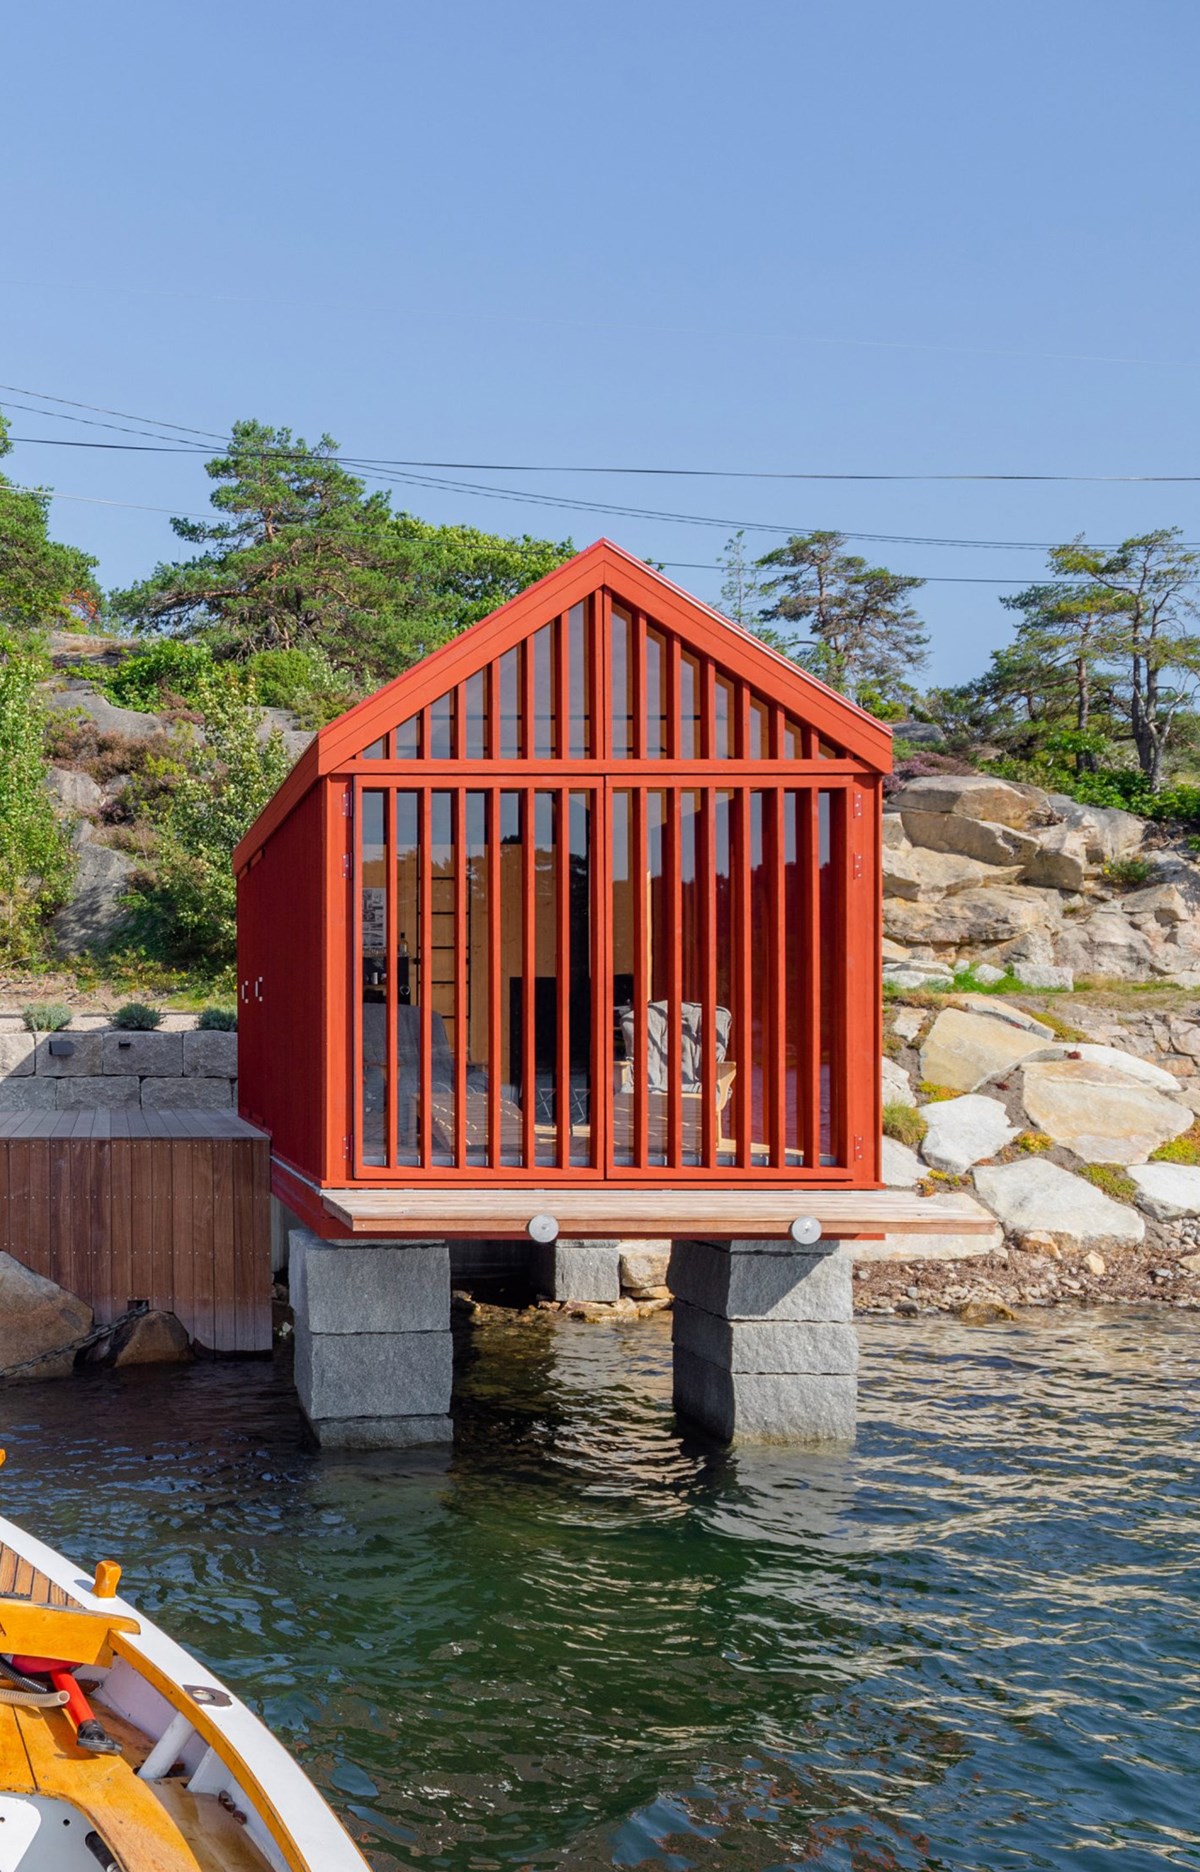 The Bathhouse by Handegård Arkitektur